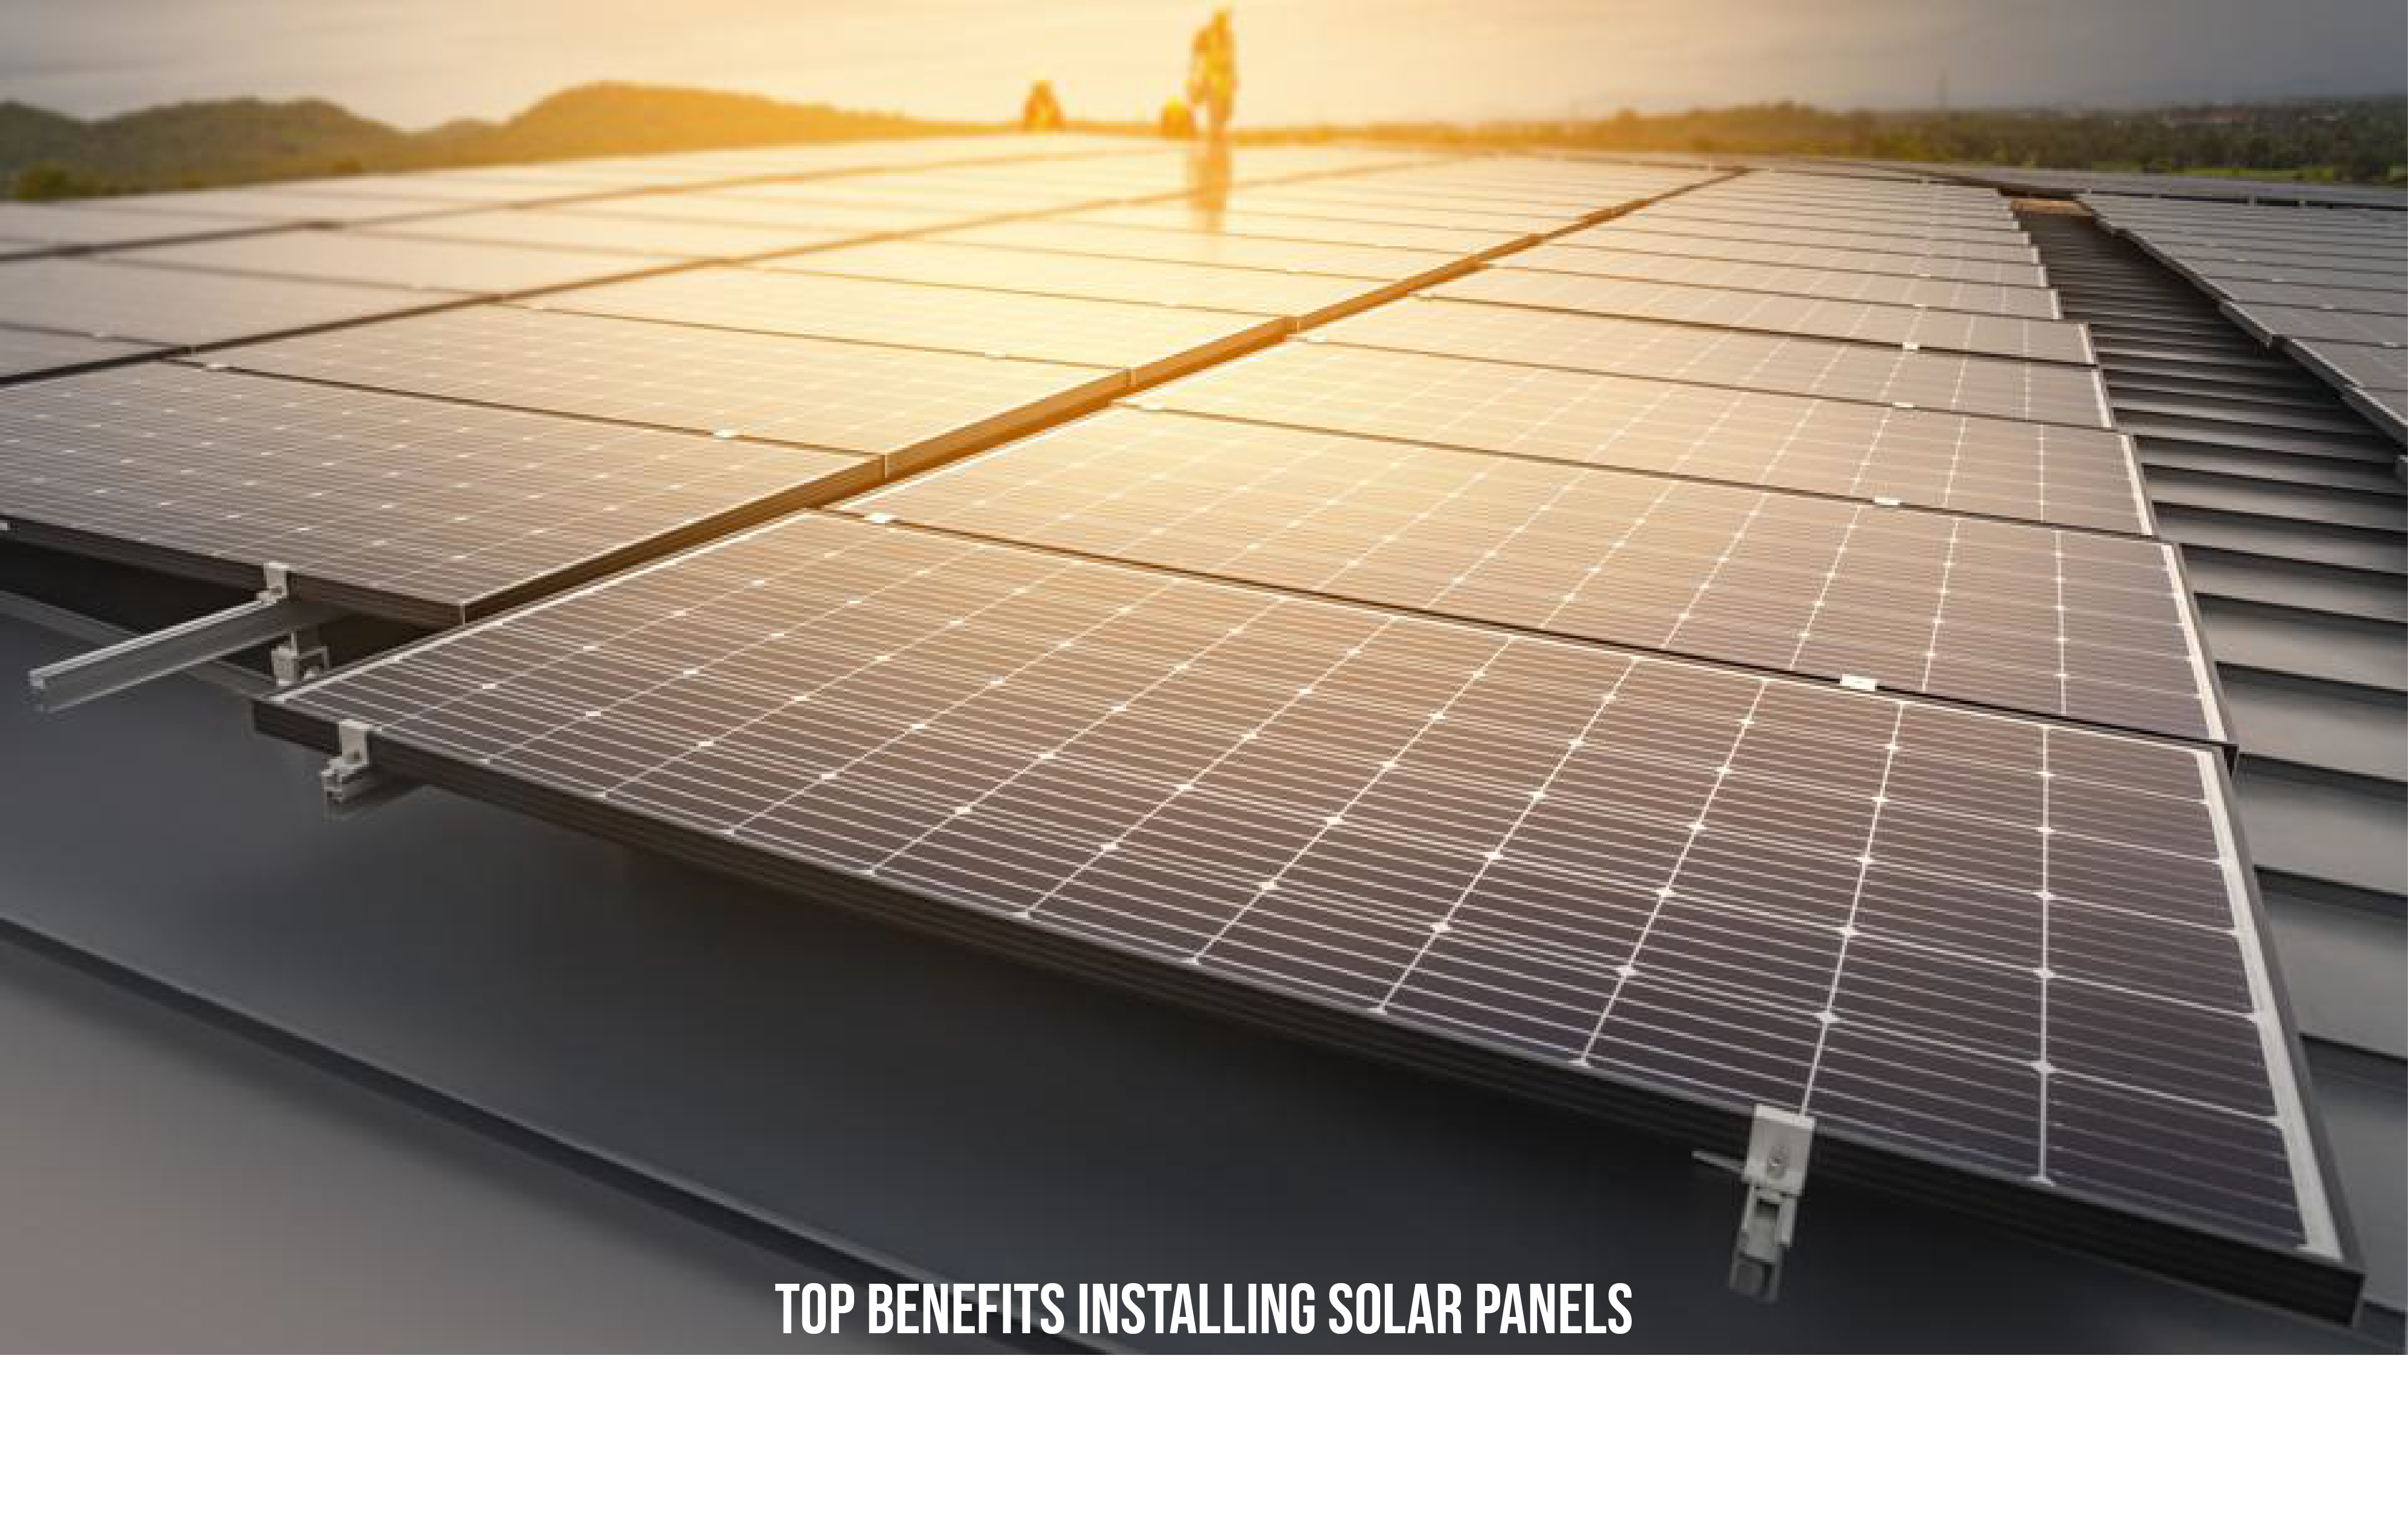 Top benefits installing solar panels